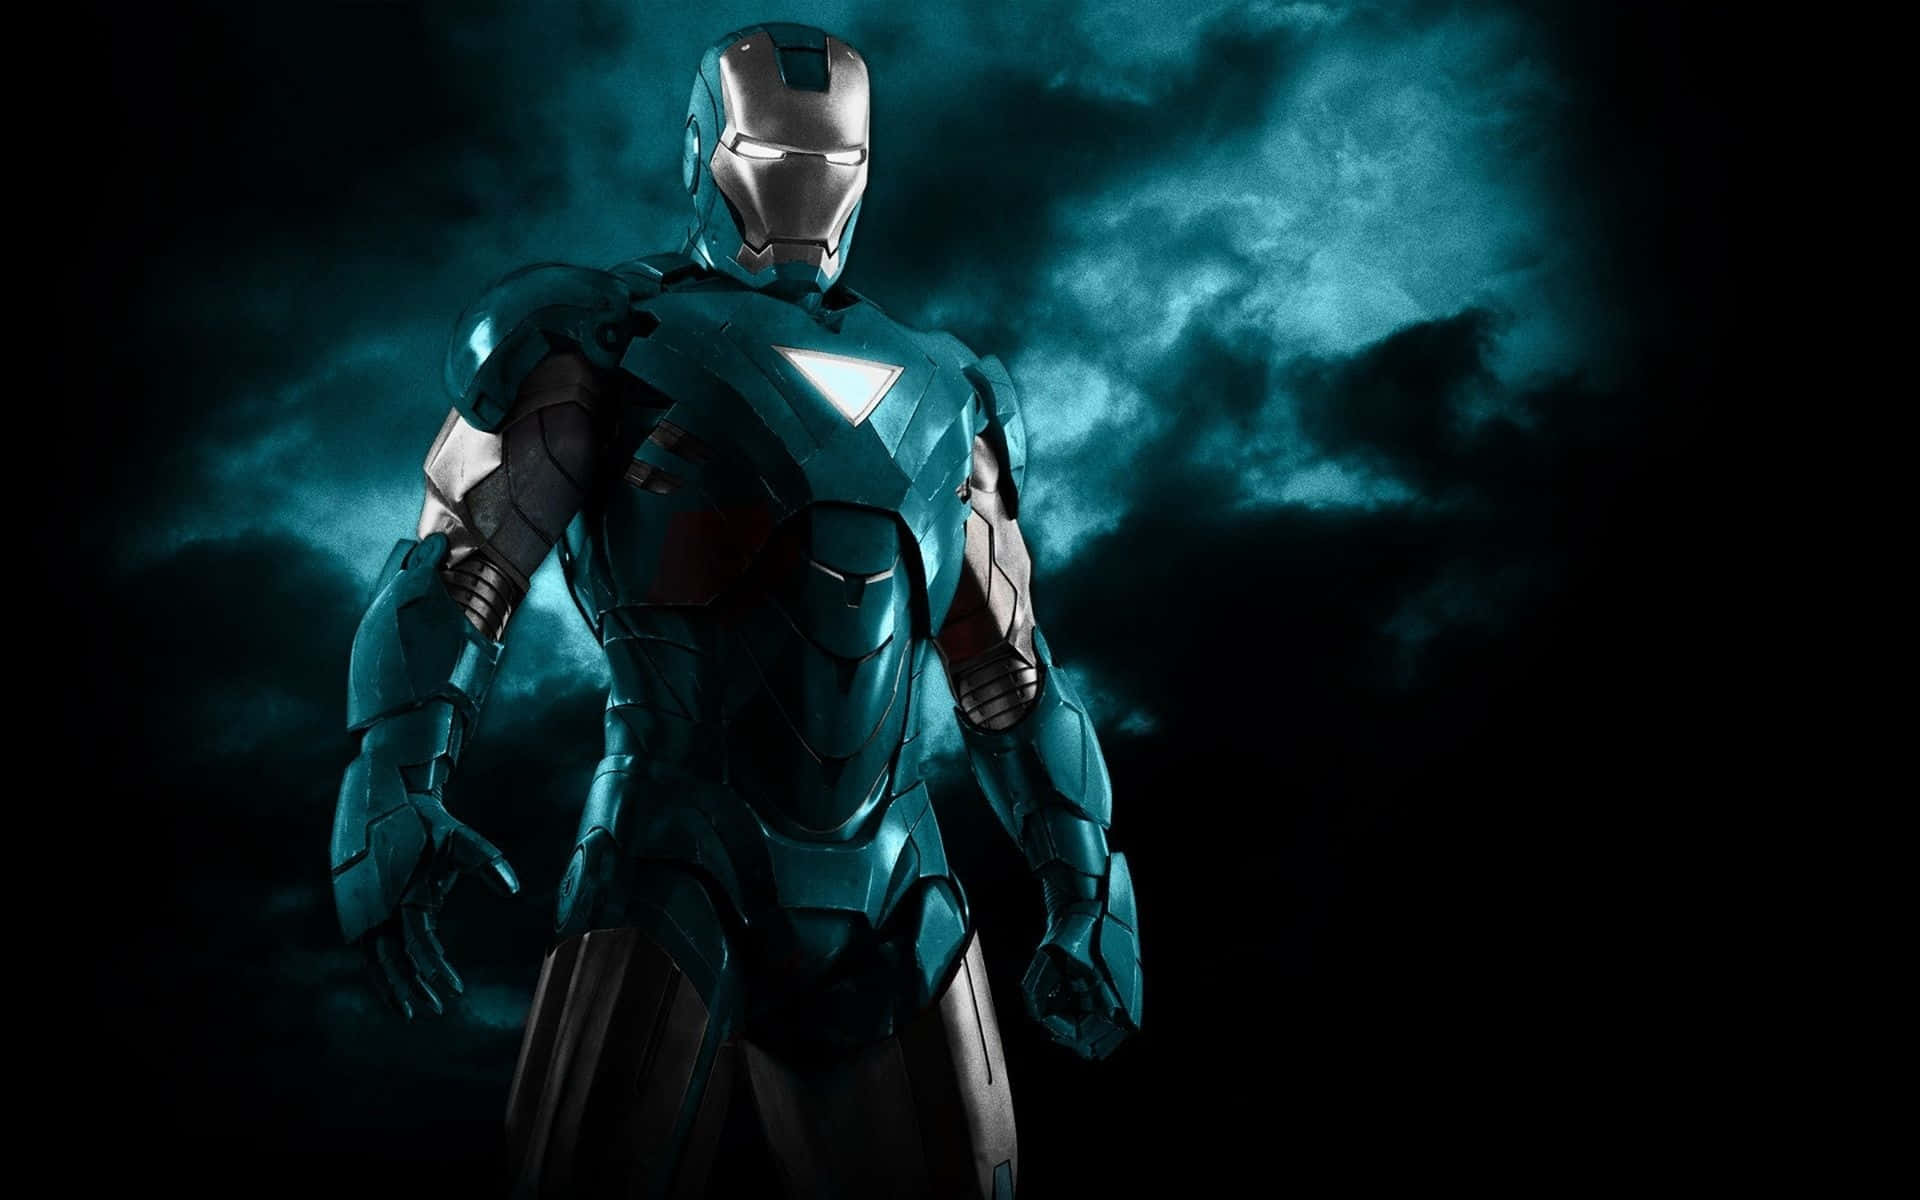 Iron Man 3: Superhero Ready For Action